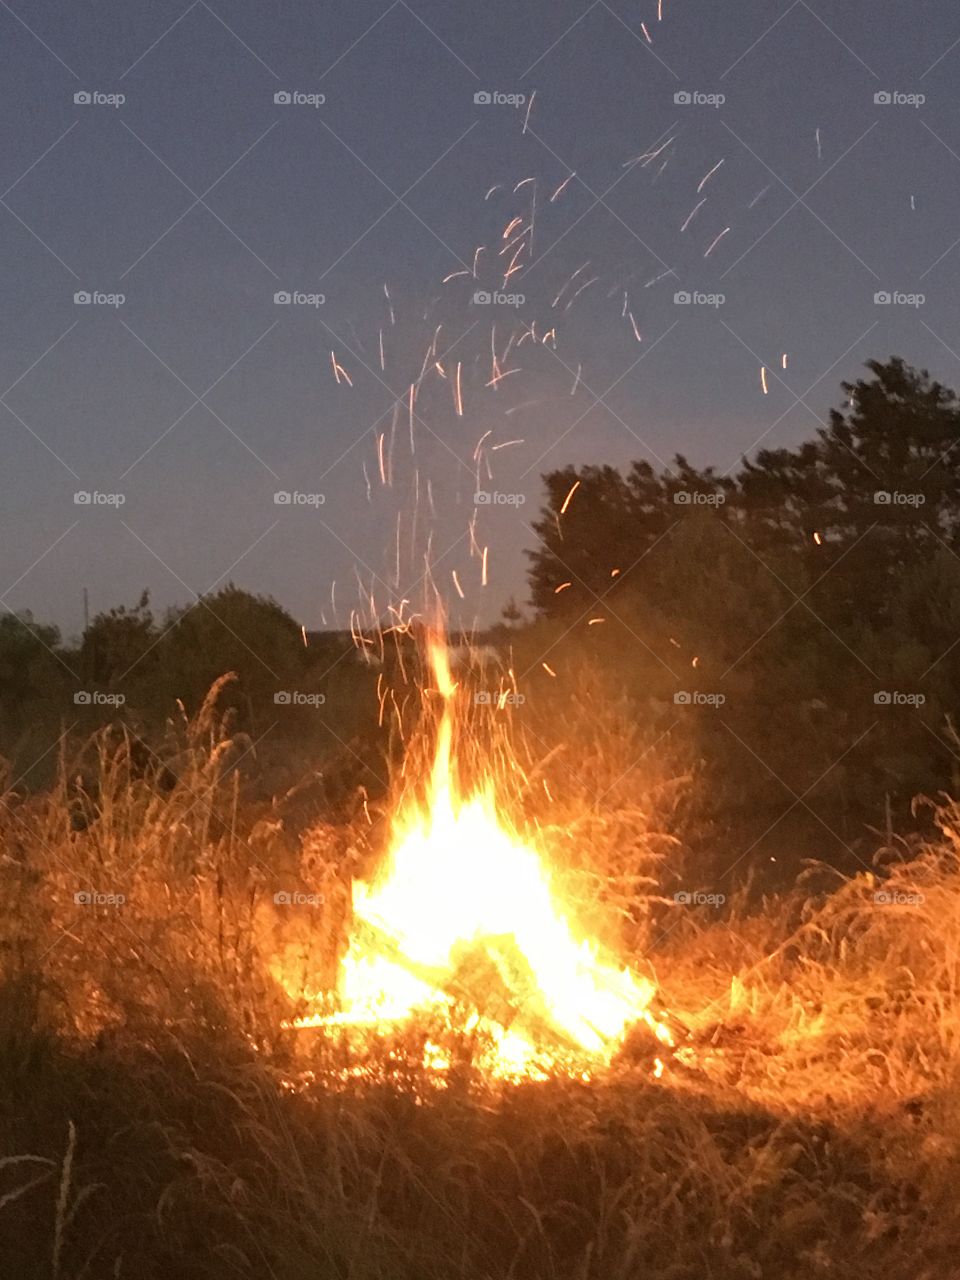 Bonfire at night 